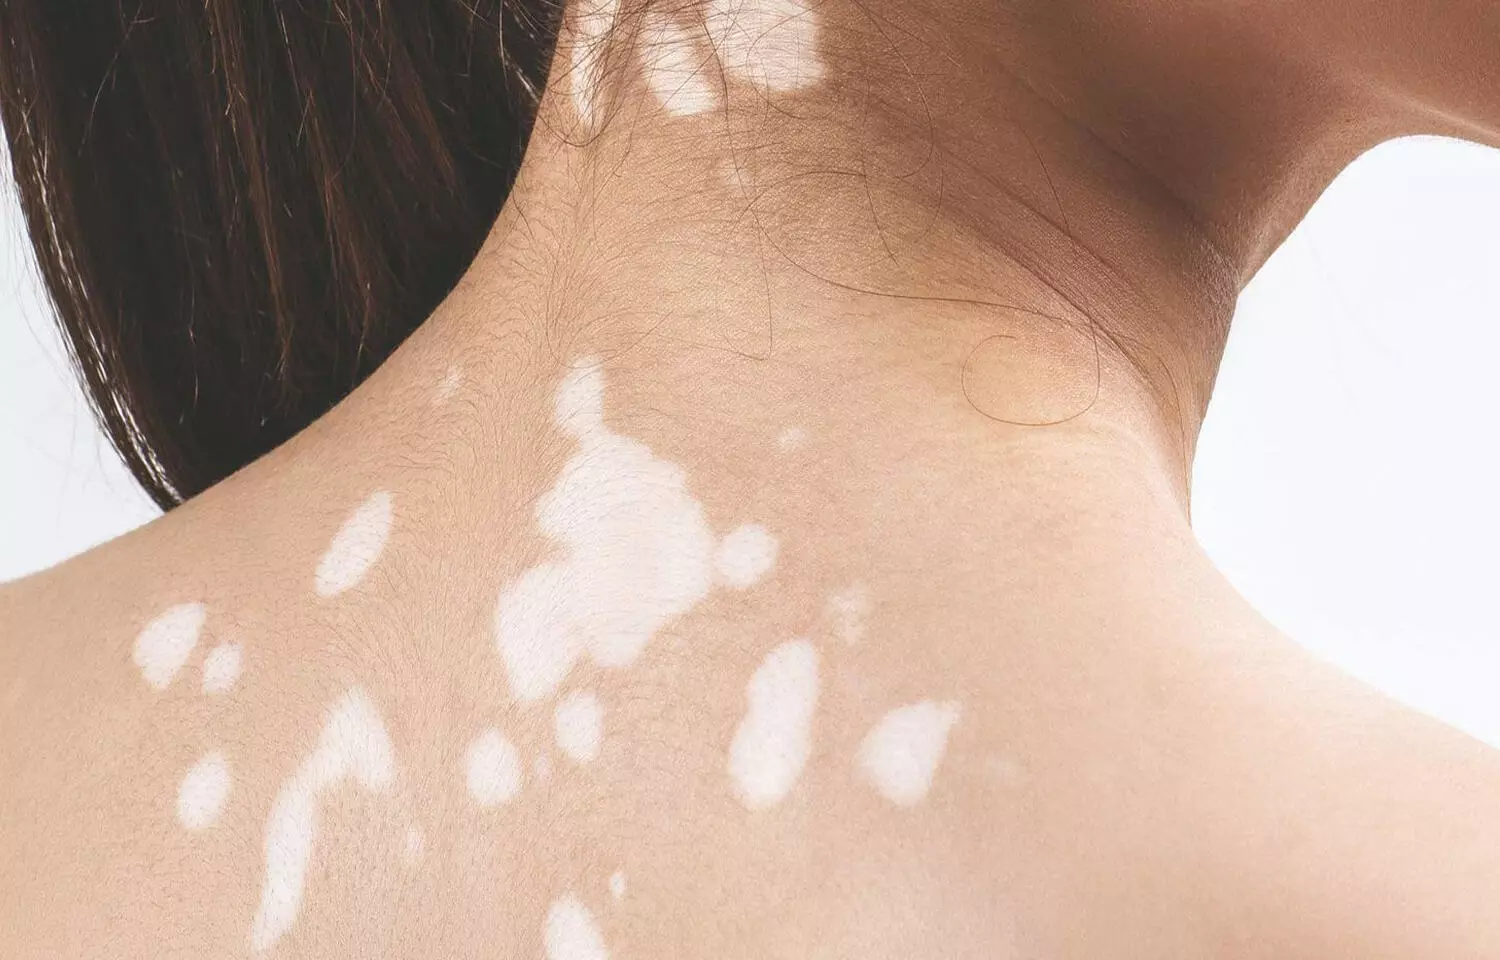 Ultraviolet light and methotrexate combo effective for vitiligo management: Study